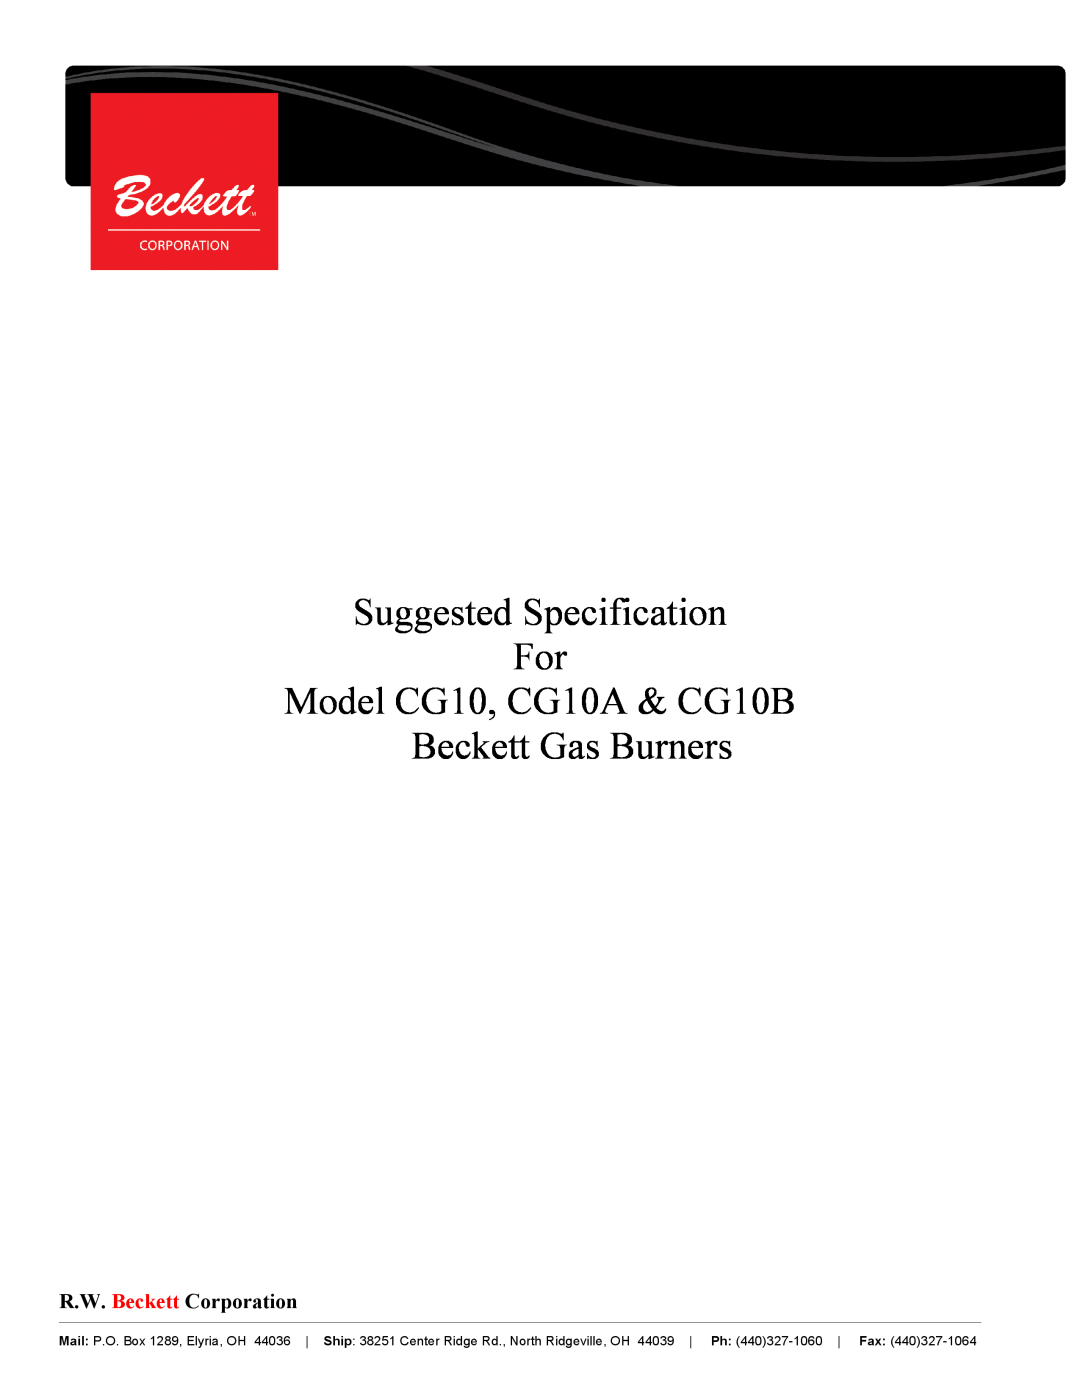 Beckett manual Suggested Specification For Model CG10, CG10A & CG10B, Beckett Gas Burners, R.W. Beckett Corporation 